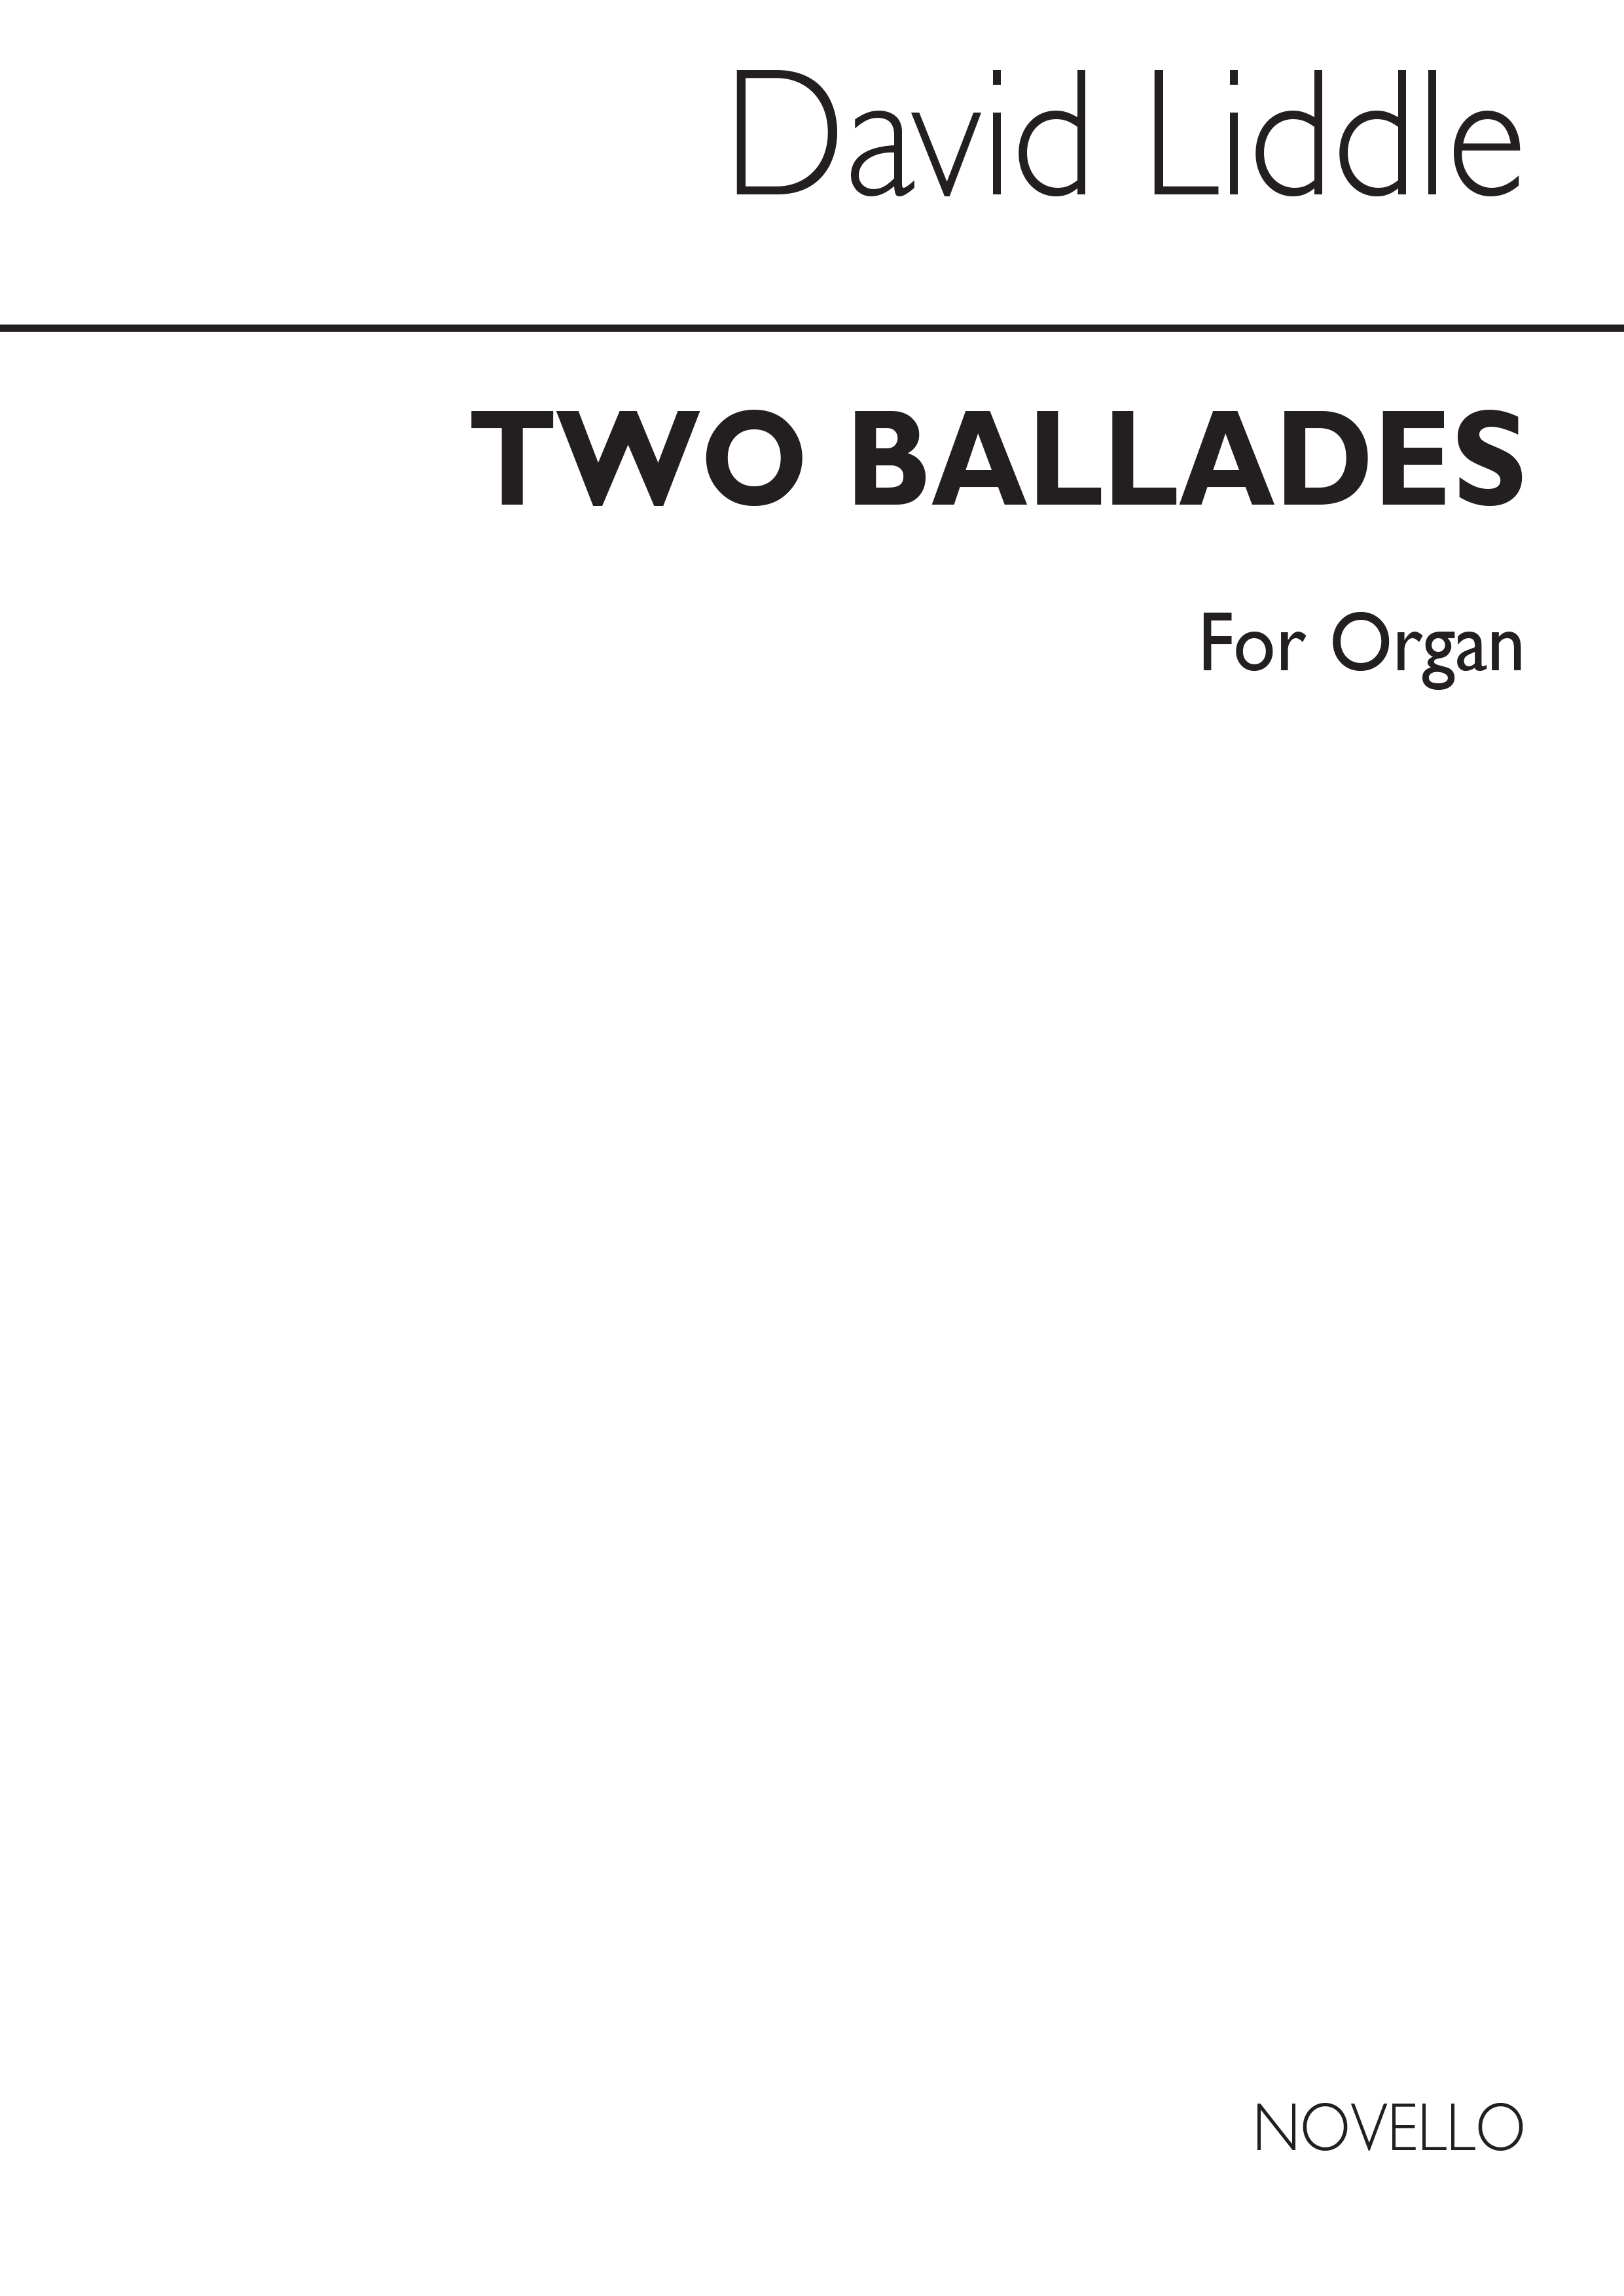 David Liddle: Two Ballades For Organ Op.2